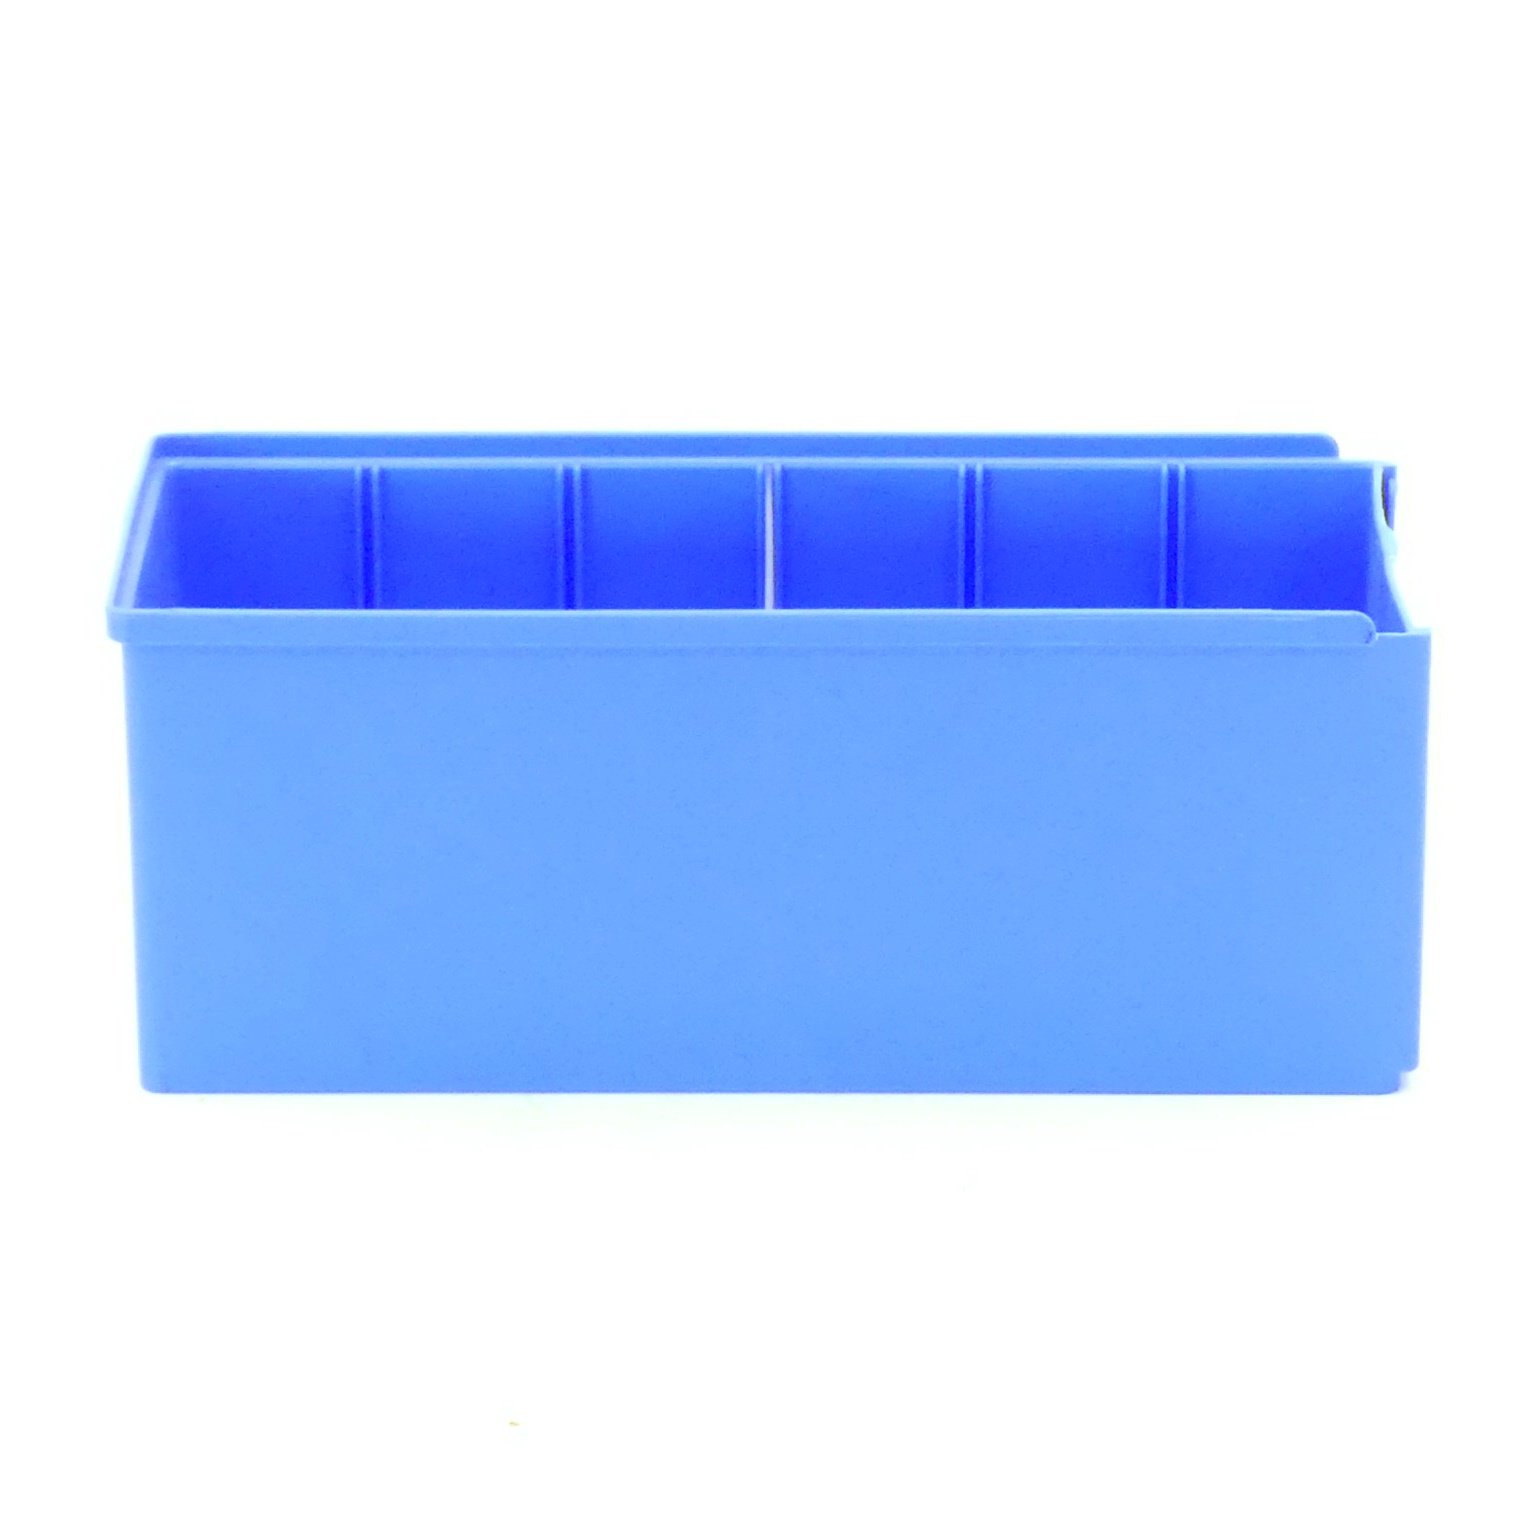 10 pieces boxes RK 300, 6 compartments, blue 